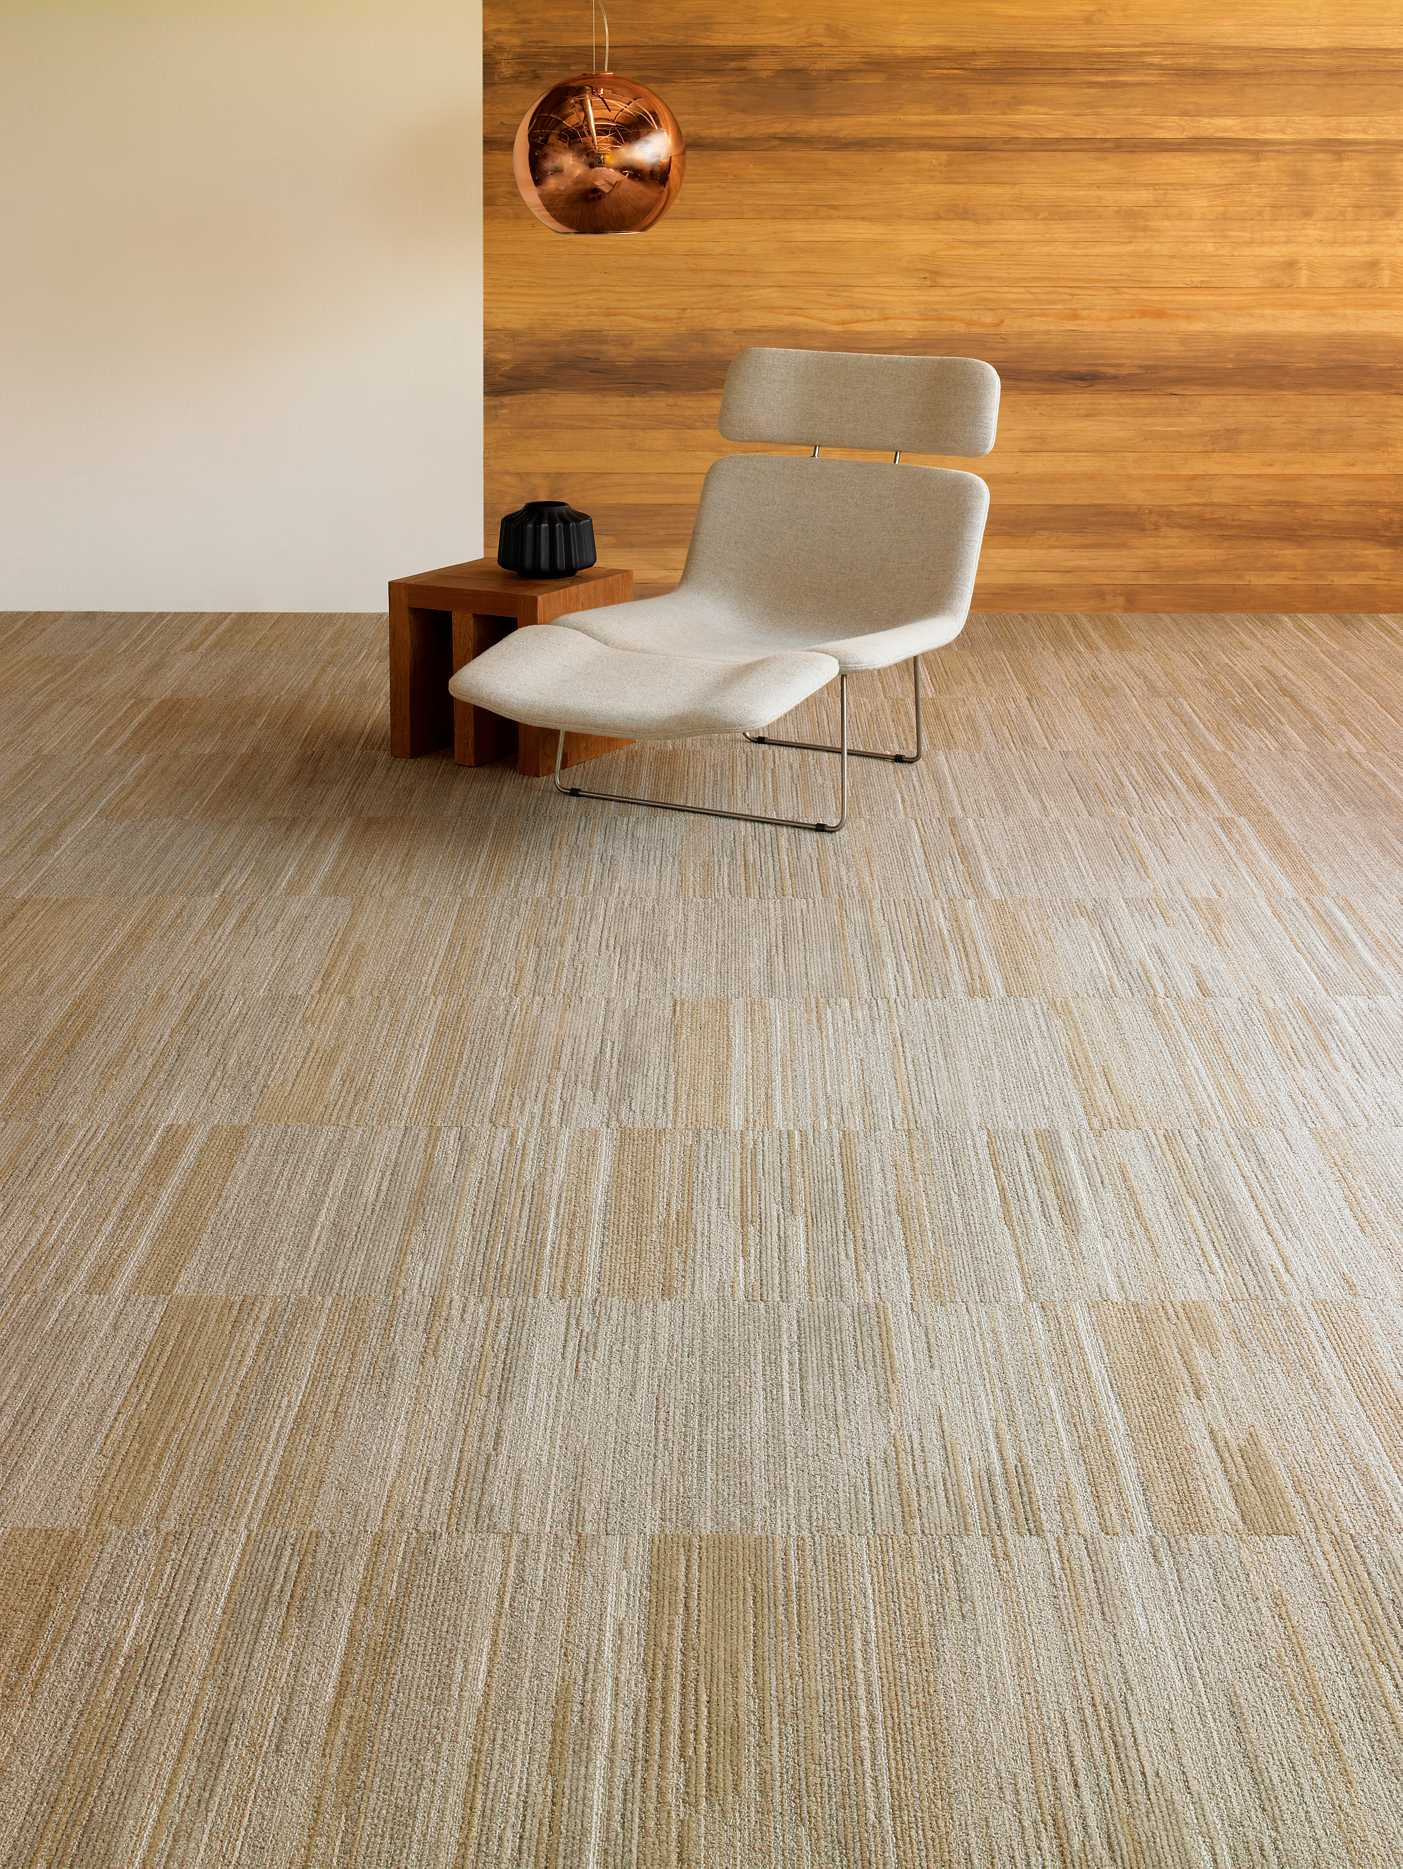 hardwood flooring york region of ingrain tile 59339 shaw contract shaw hospitality intended for 59339